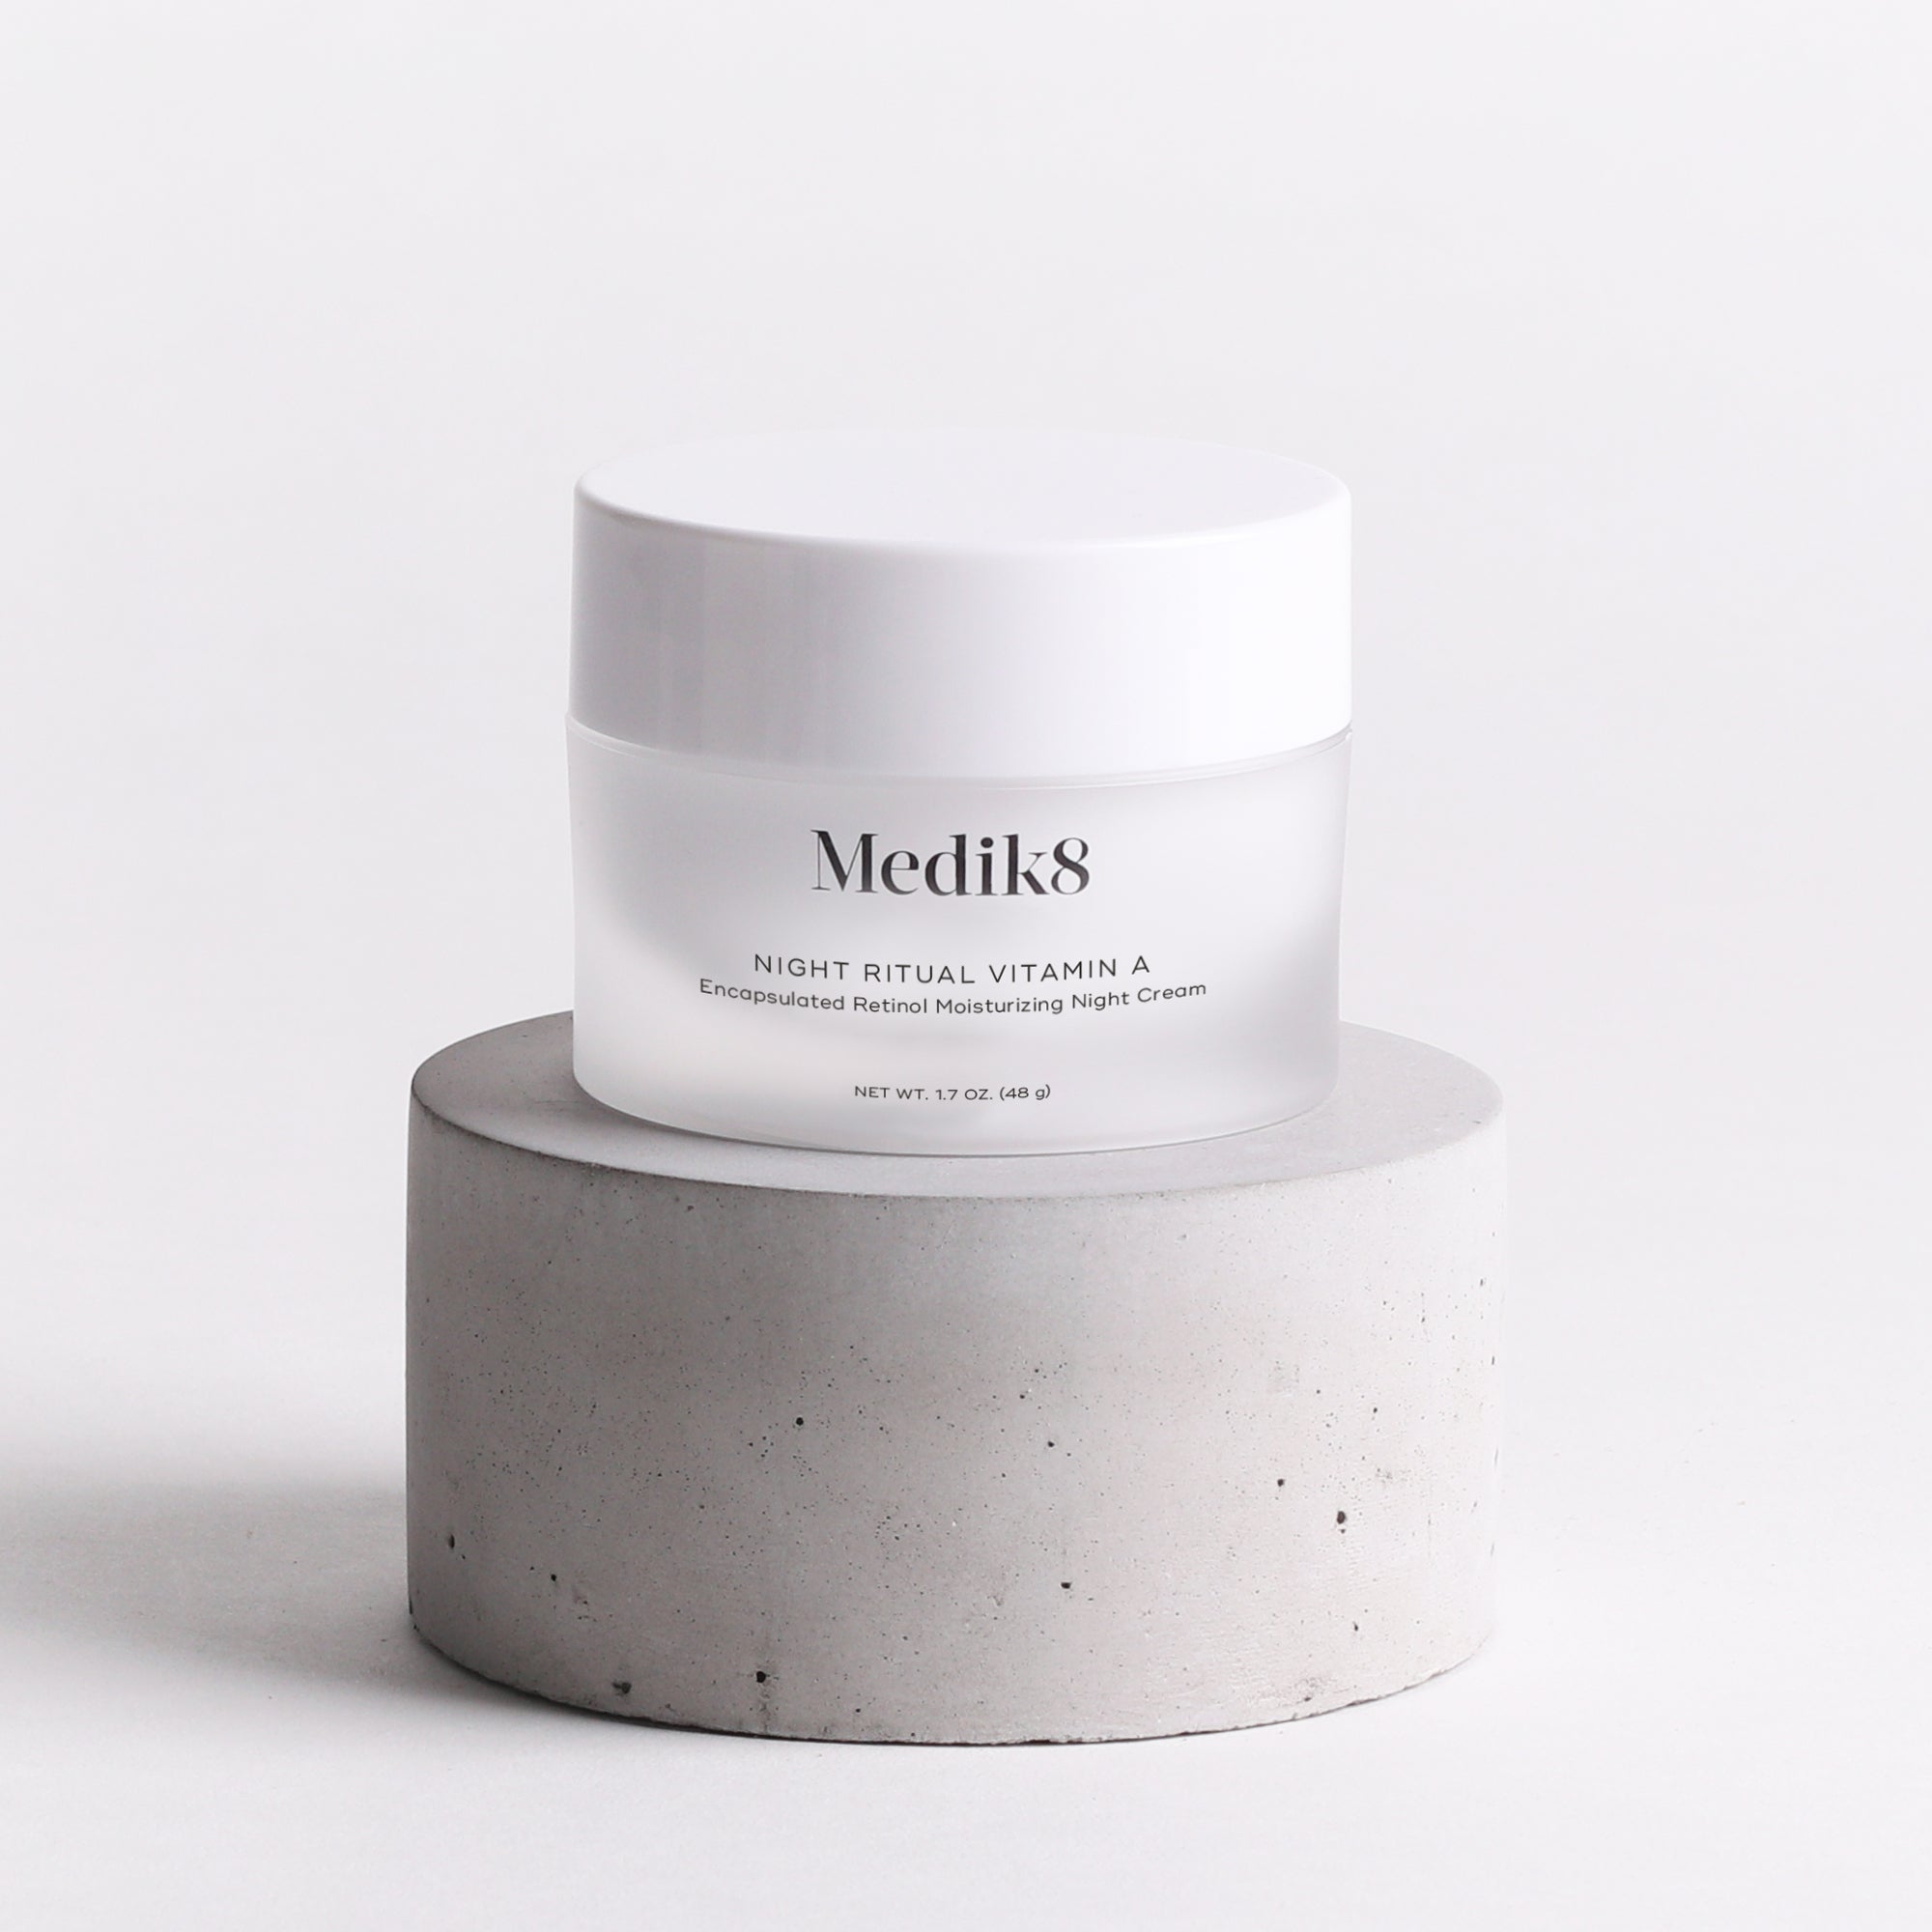 Night Ritual Vitamin A by Medik8. An encapsulated retinol moisturizing night cream.